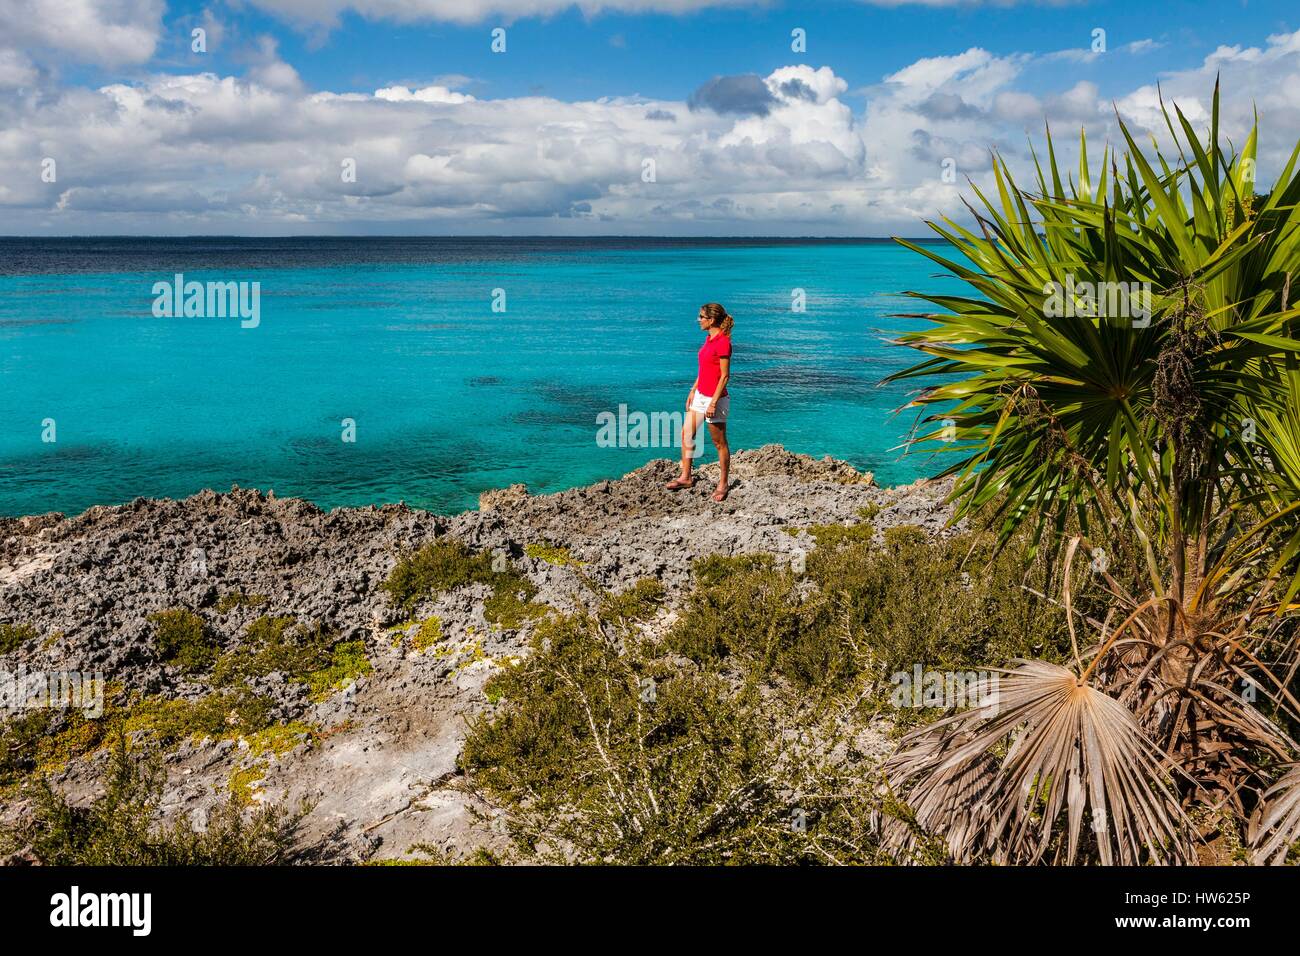 Cuba, provincia di Matanzas, penisola di Zapata, Baia dei maiali, Playa Giron Foto Stock